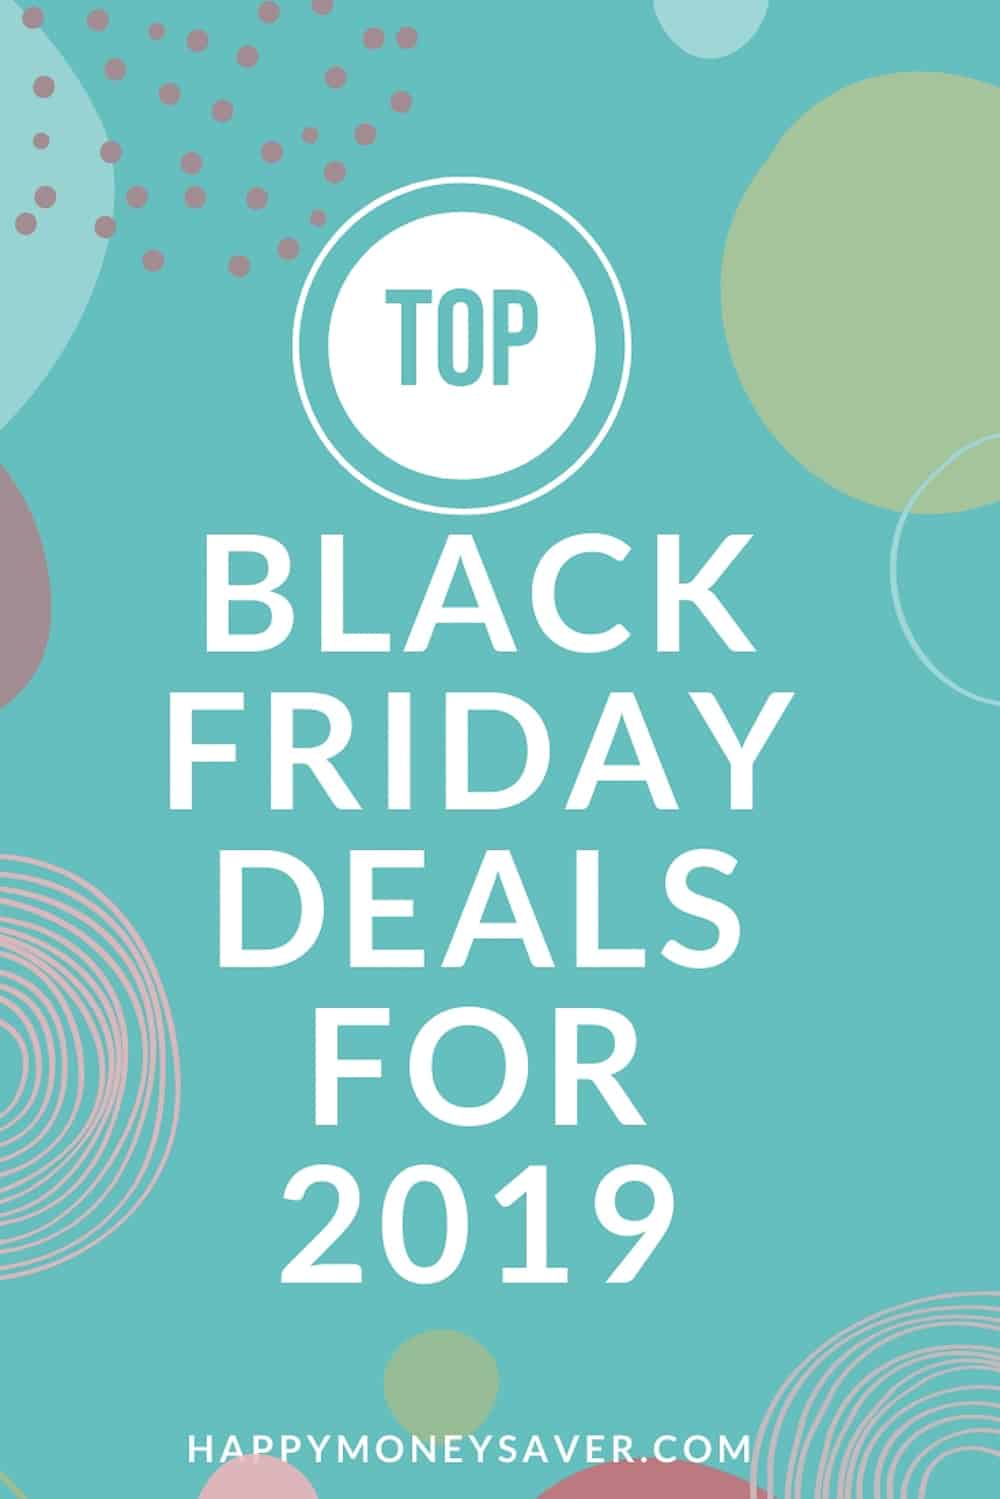 Top Black Friday Deals 2021 + Amazon price comparison